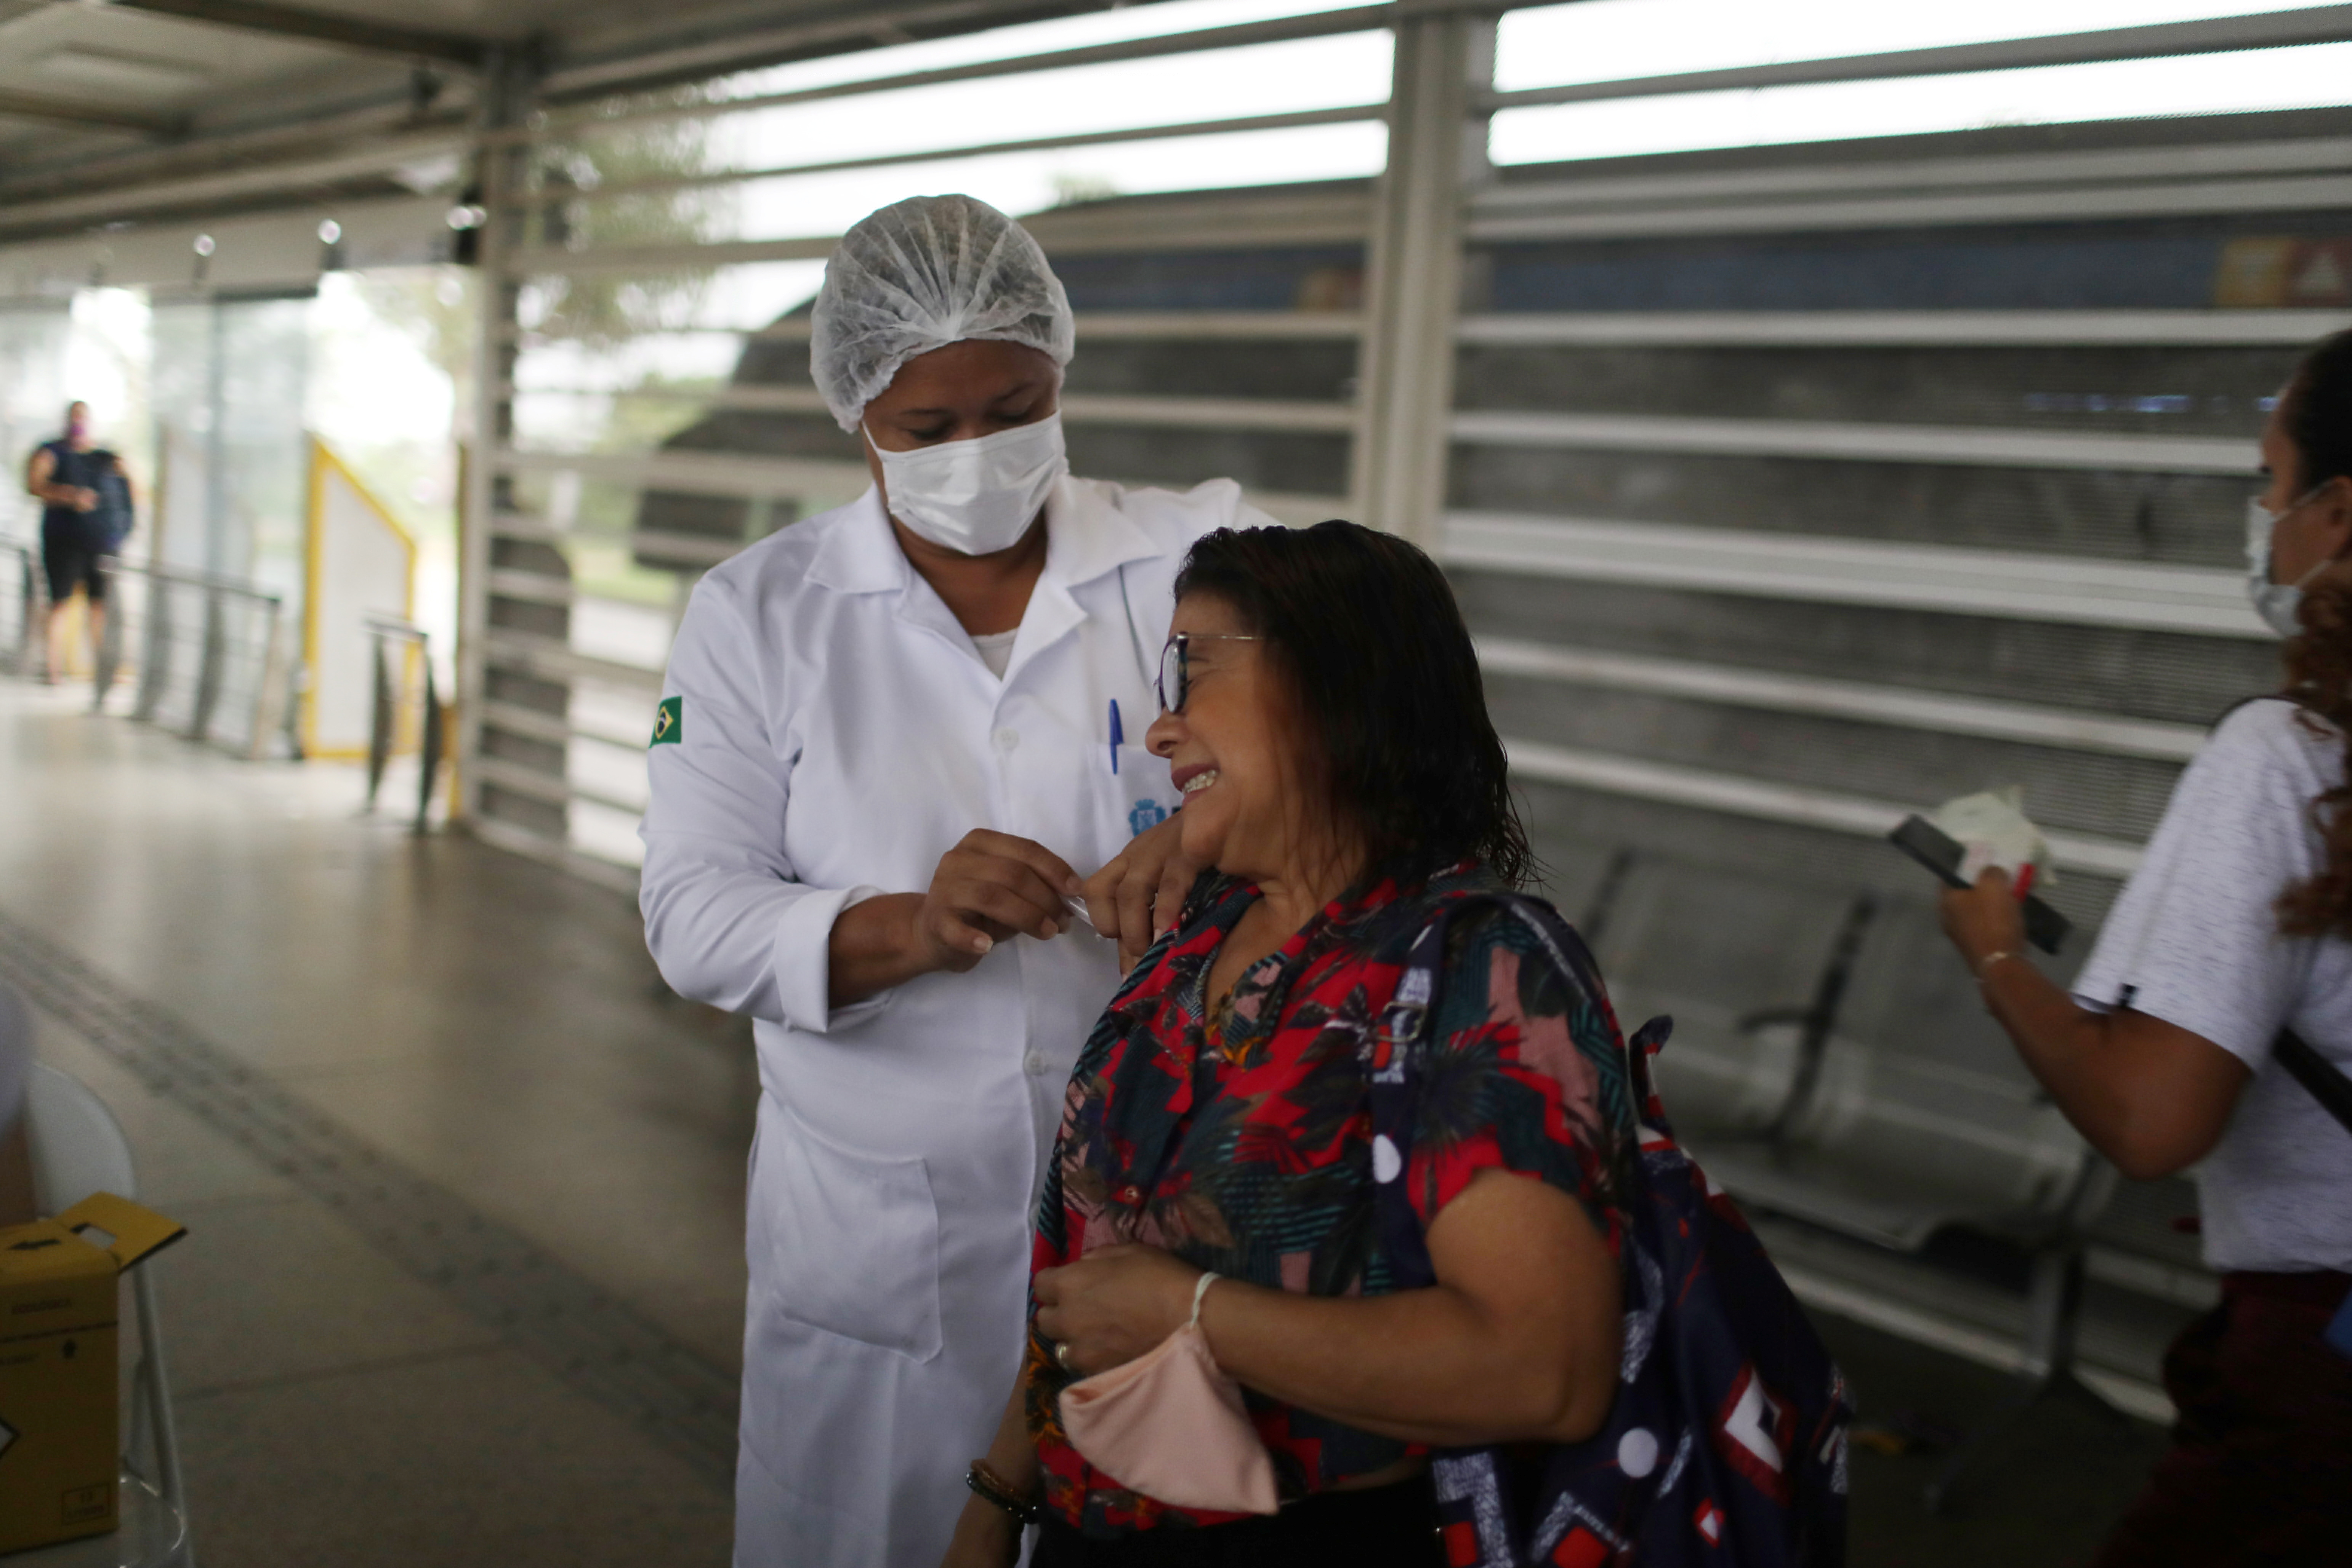 Vaccination against the coronavirus disease (COVID-19) at Bus Rapid Transit (BRT) station in Rio de Janeiro